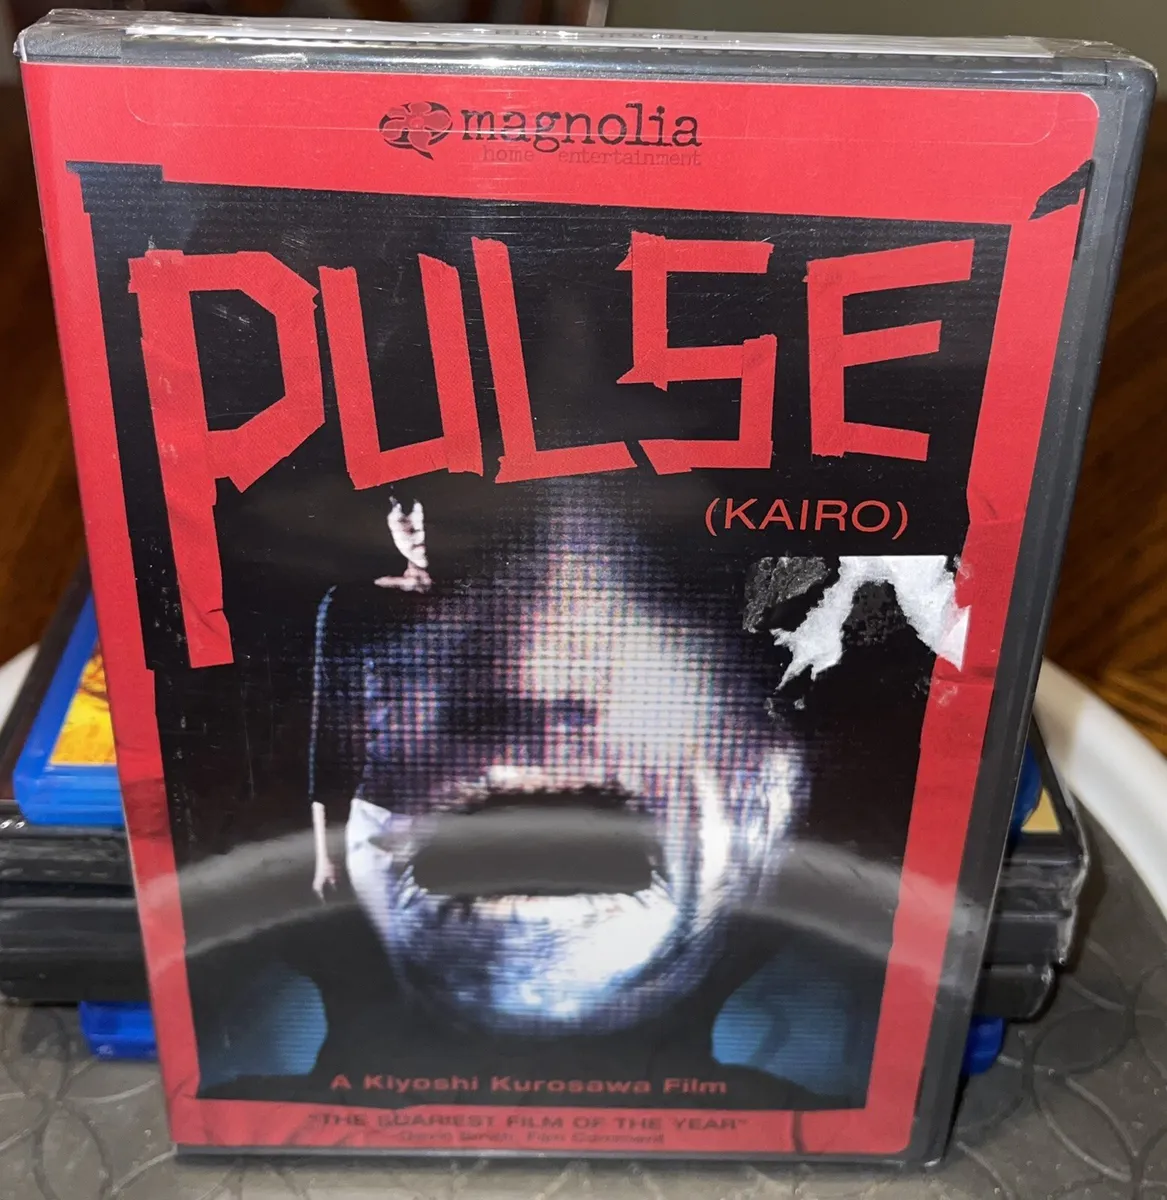 Pulse (KAIRO) DVD Kiyoshi Kurosawa Japanese with English Subtitles SEALED  876964000055